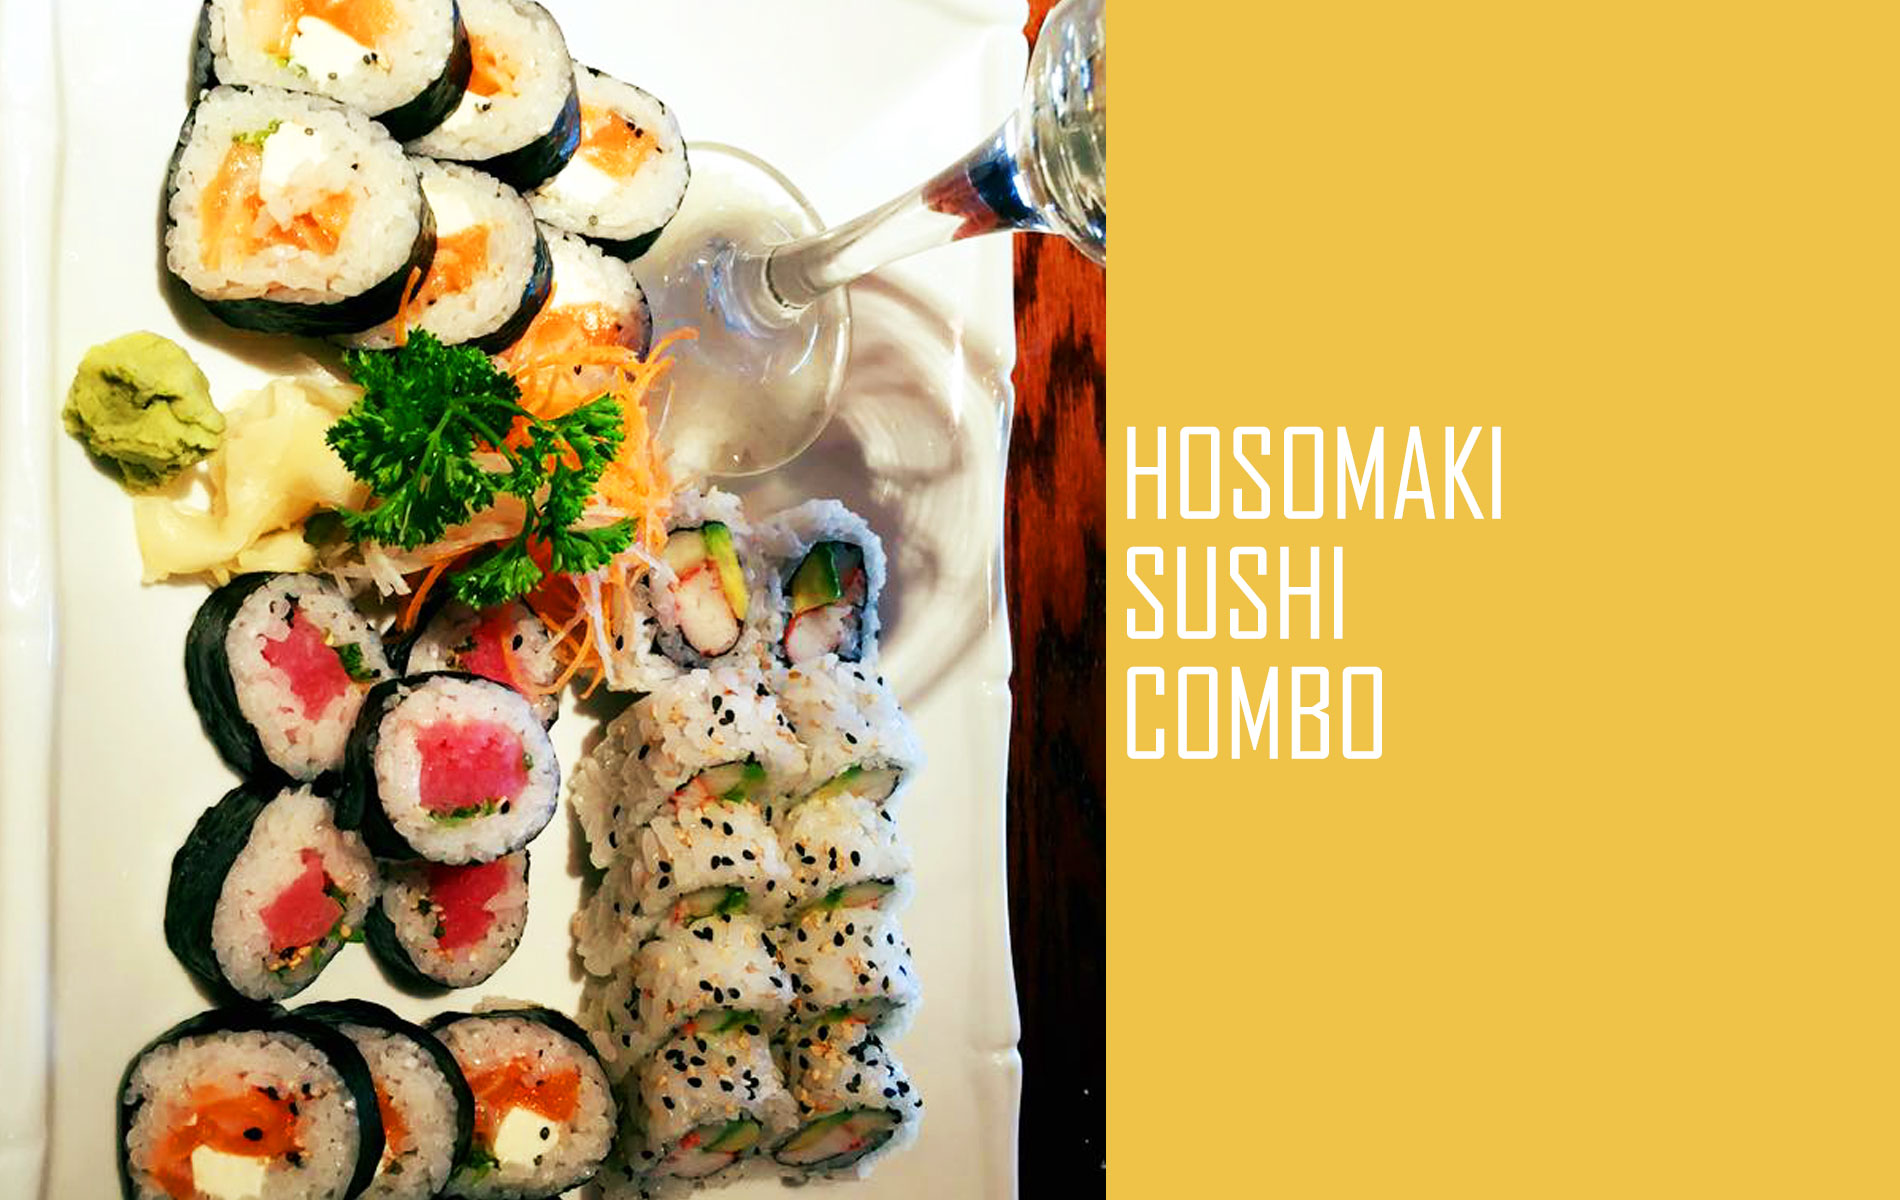 Hosomaki Sushi Combo